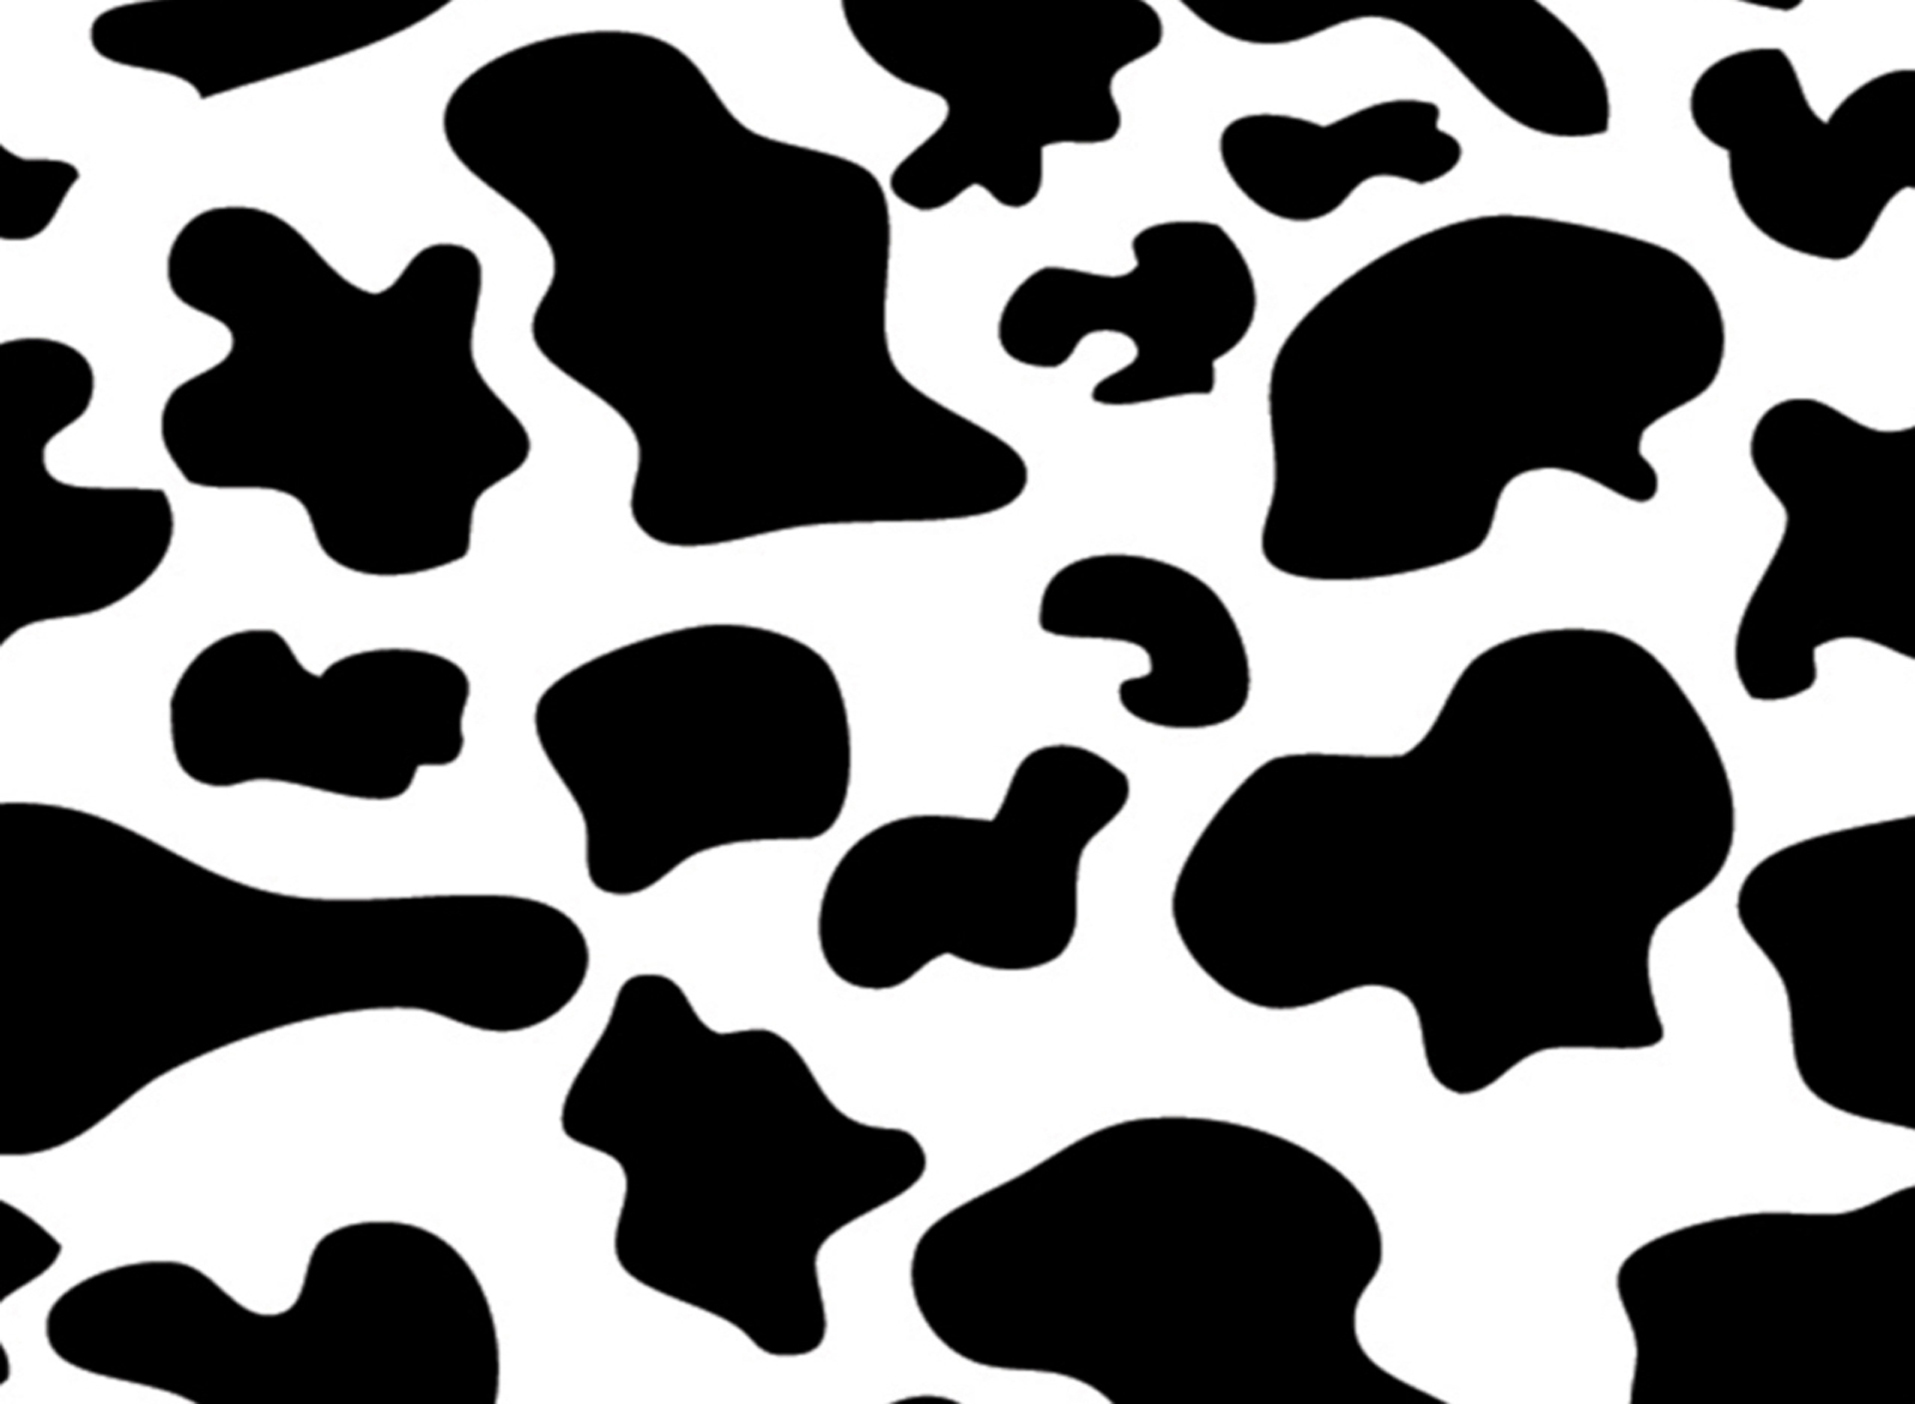 Cow print Wallpaper  Cow print wallpaper, Cow wallpaper, Animal